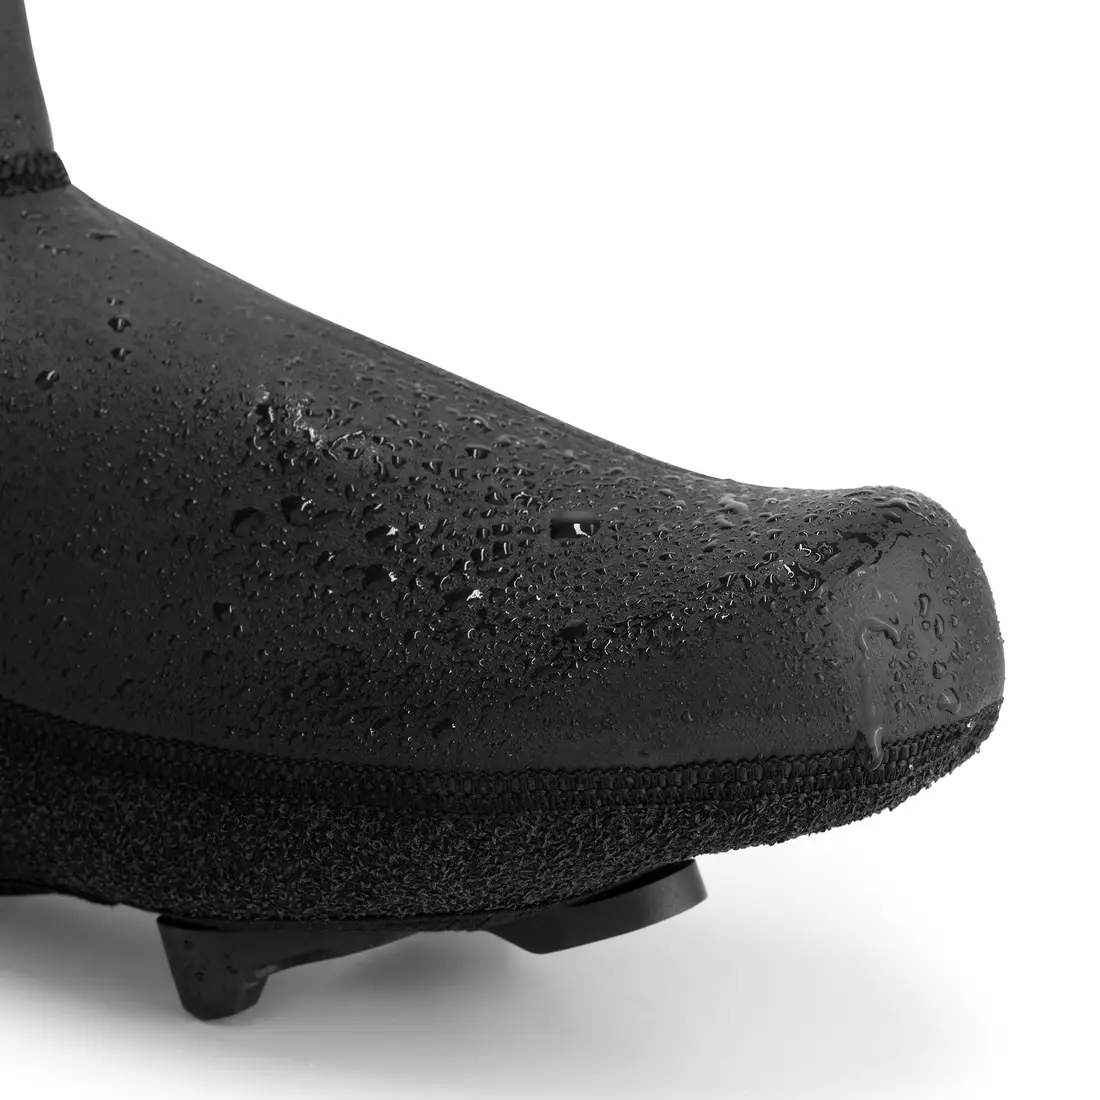 Rogelli ARTEC cycling shoe covers, black